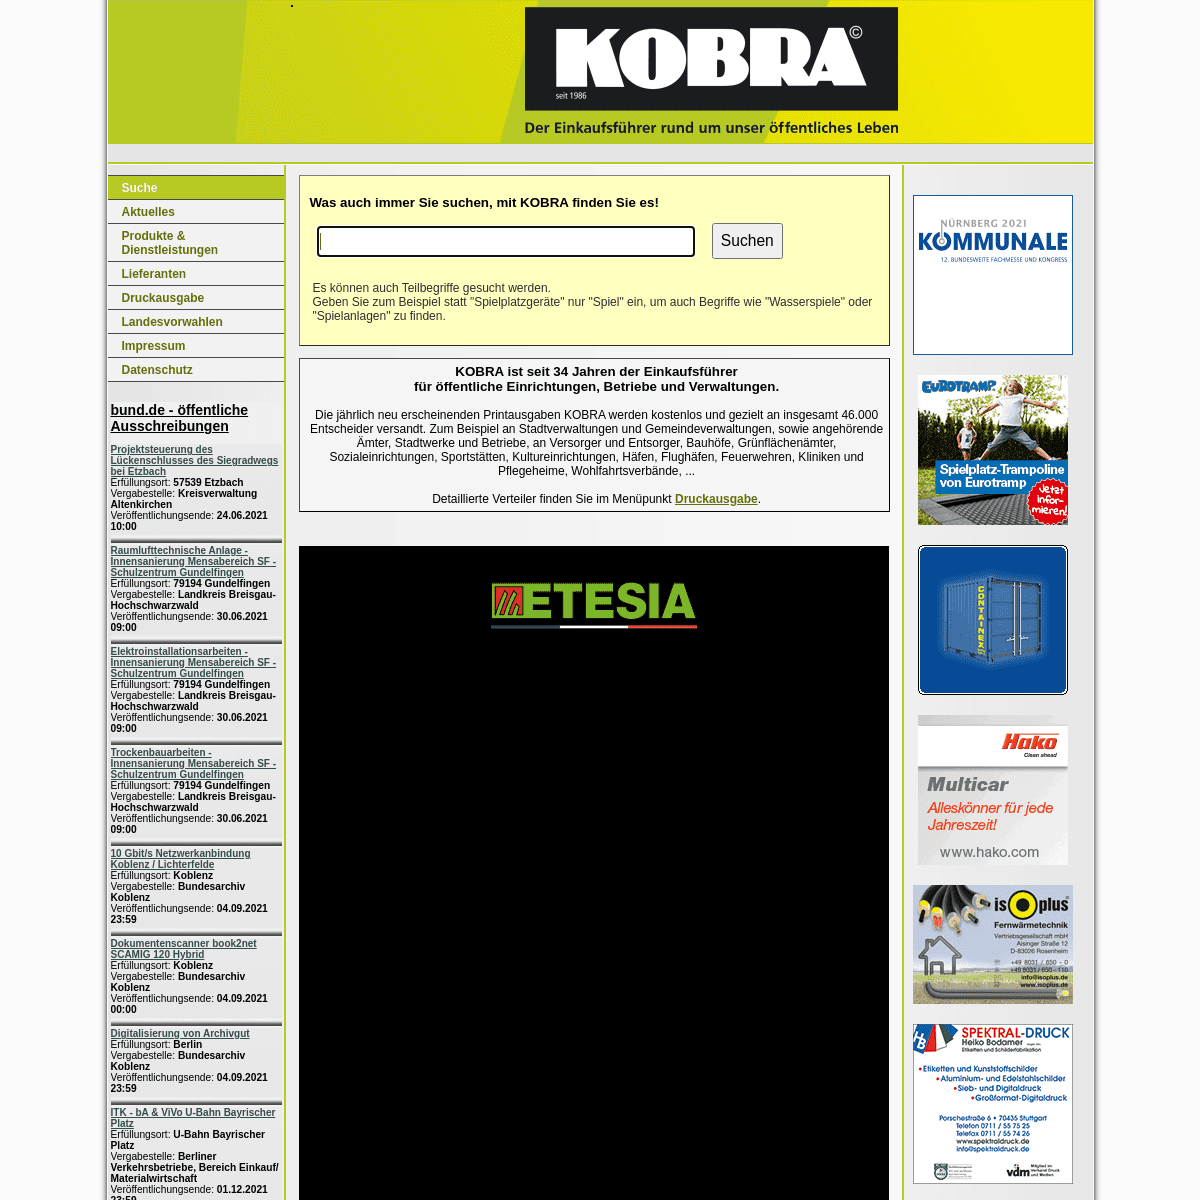 A complete backup of https://kobra-verlag.com